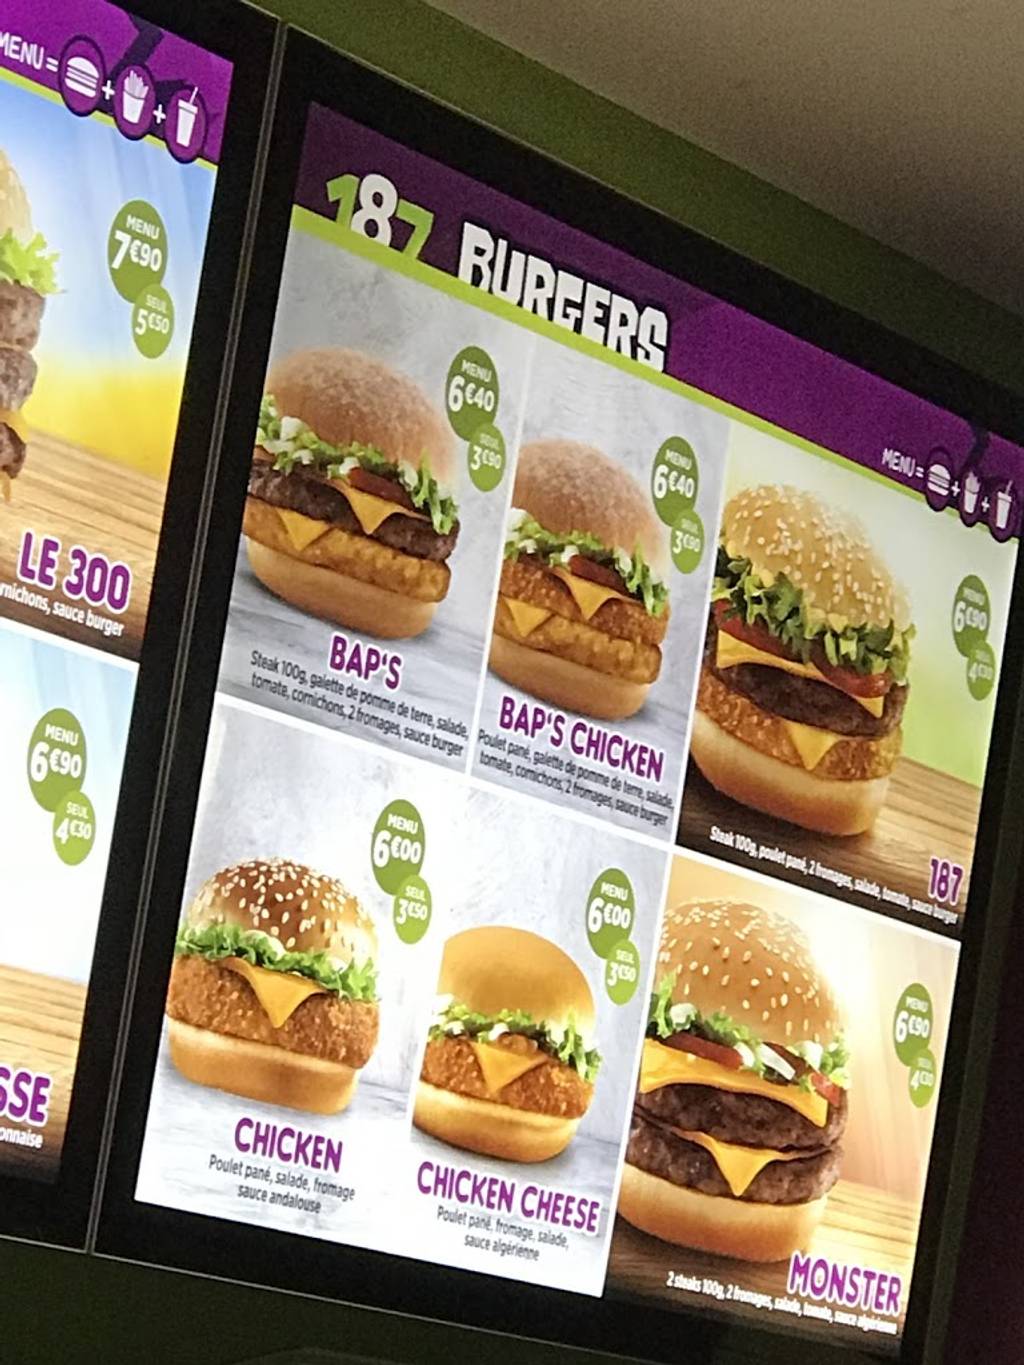 Le 187 - Mulhouse Burger Mulhouse - Hamburger Fast food Cheeseburger Advertising Big mac